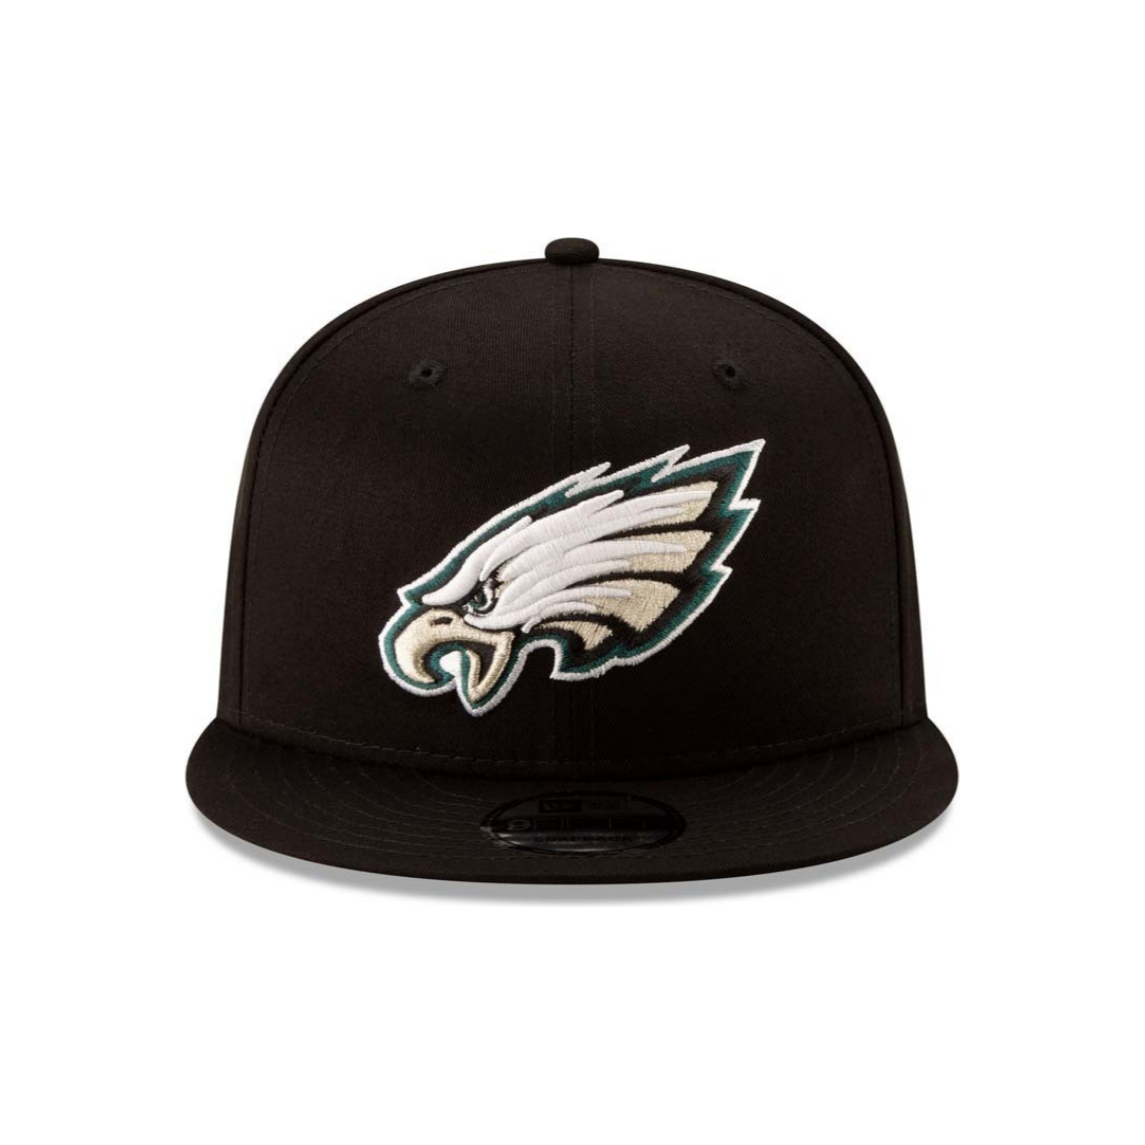 New Era Philadelphia Eagles Snap 9Fifty Snapback Hat - Black